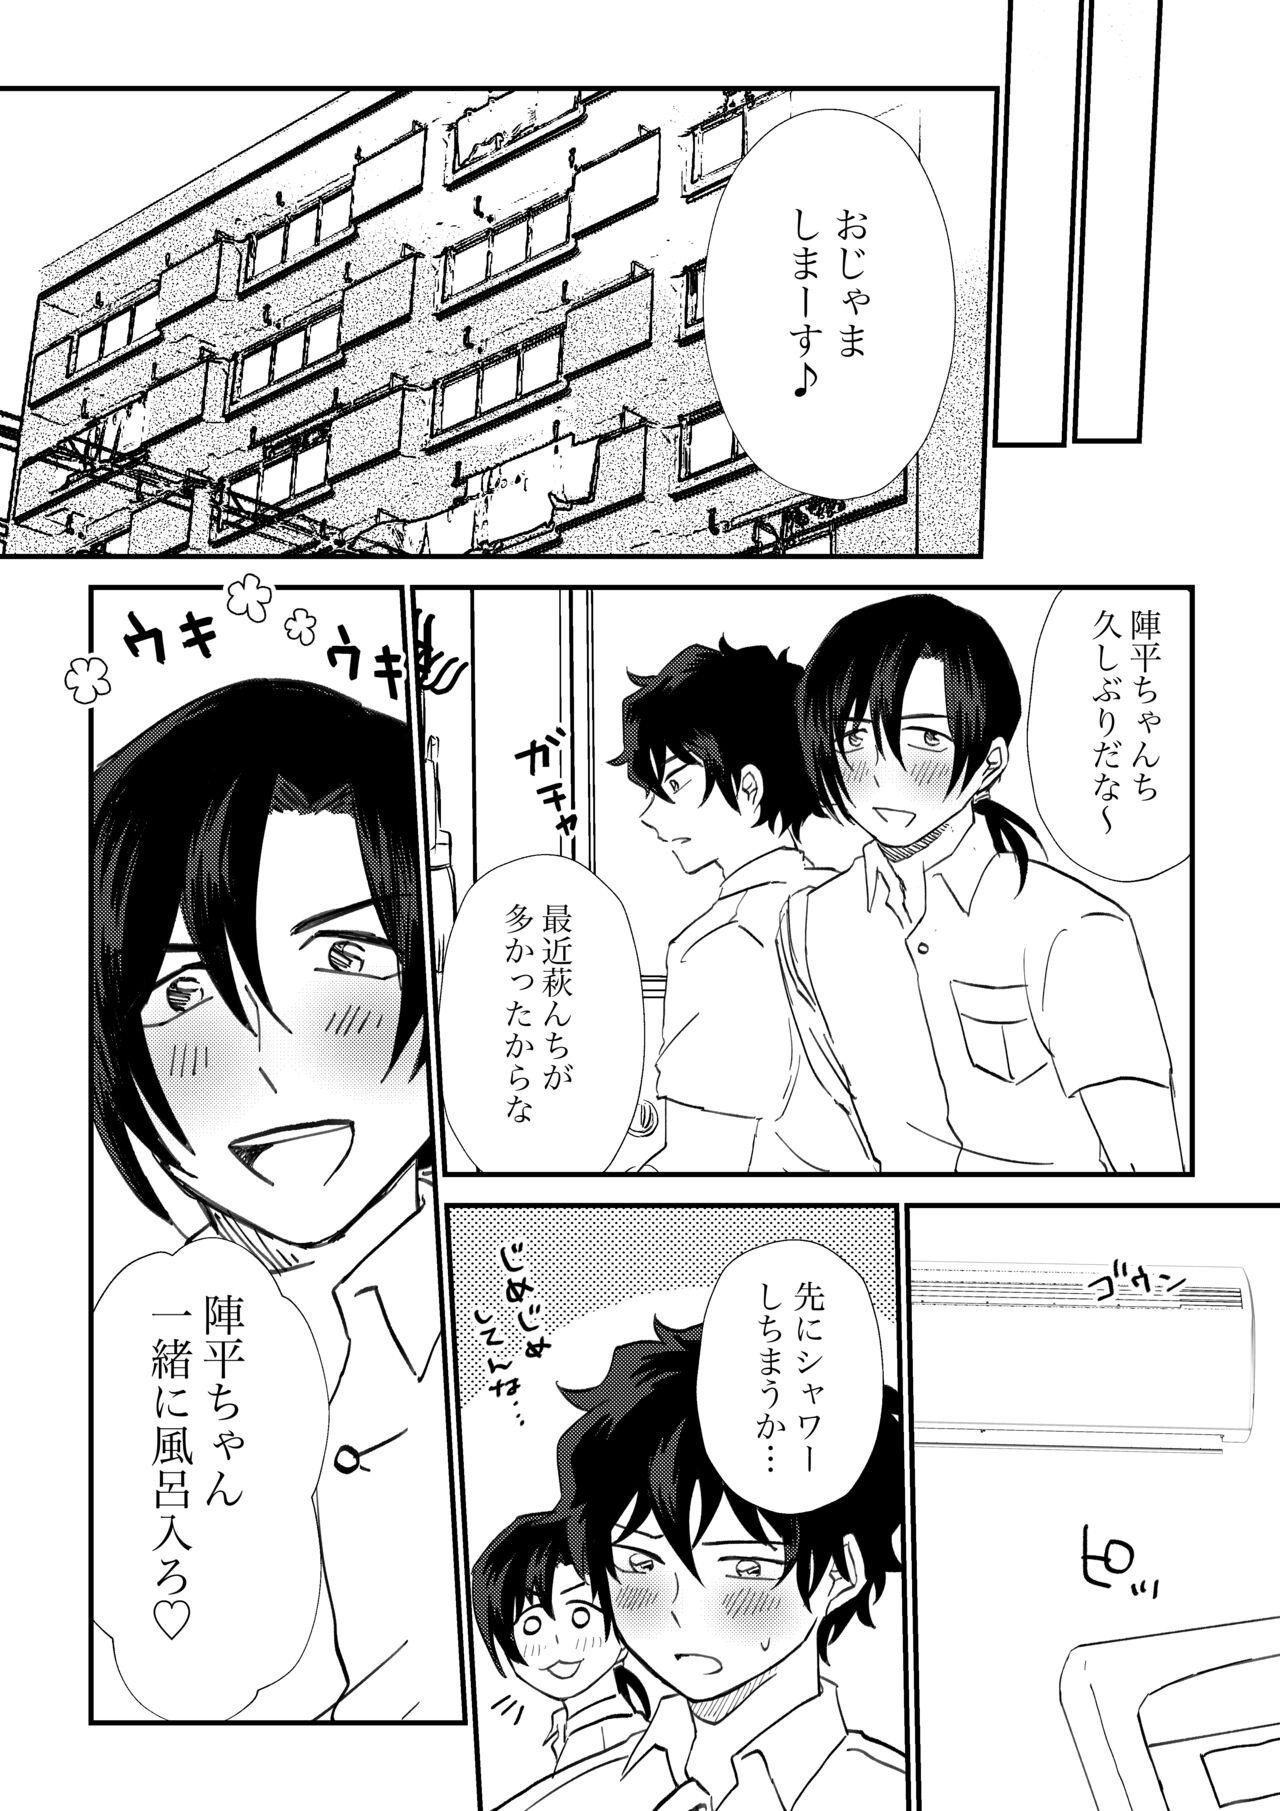 Weird All because of summer - Detective conan | meitantei conan Large - Page 11